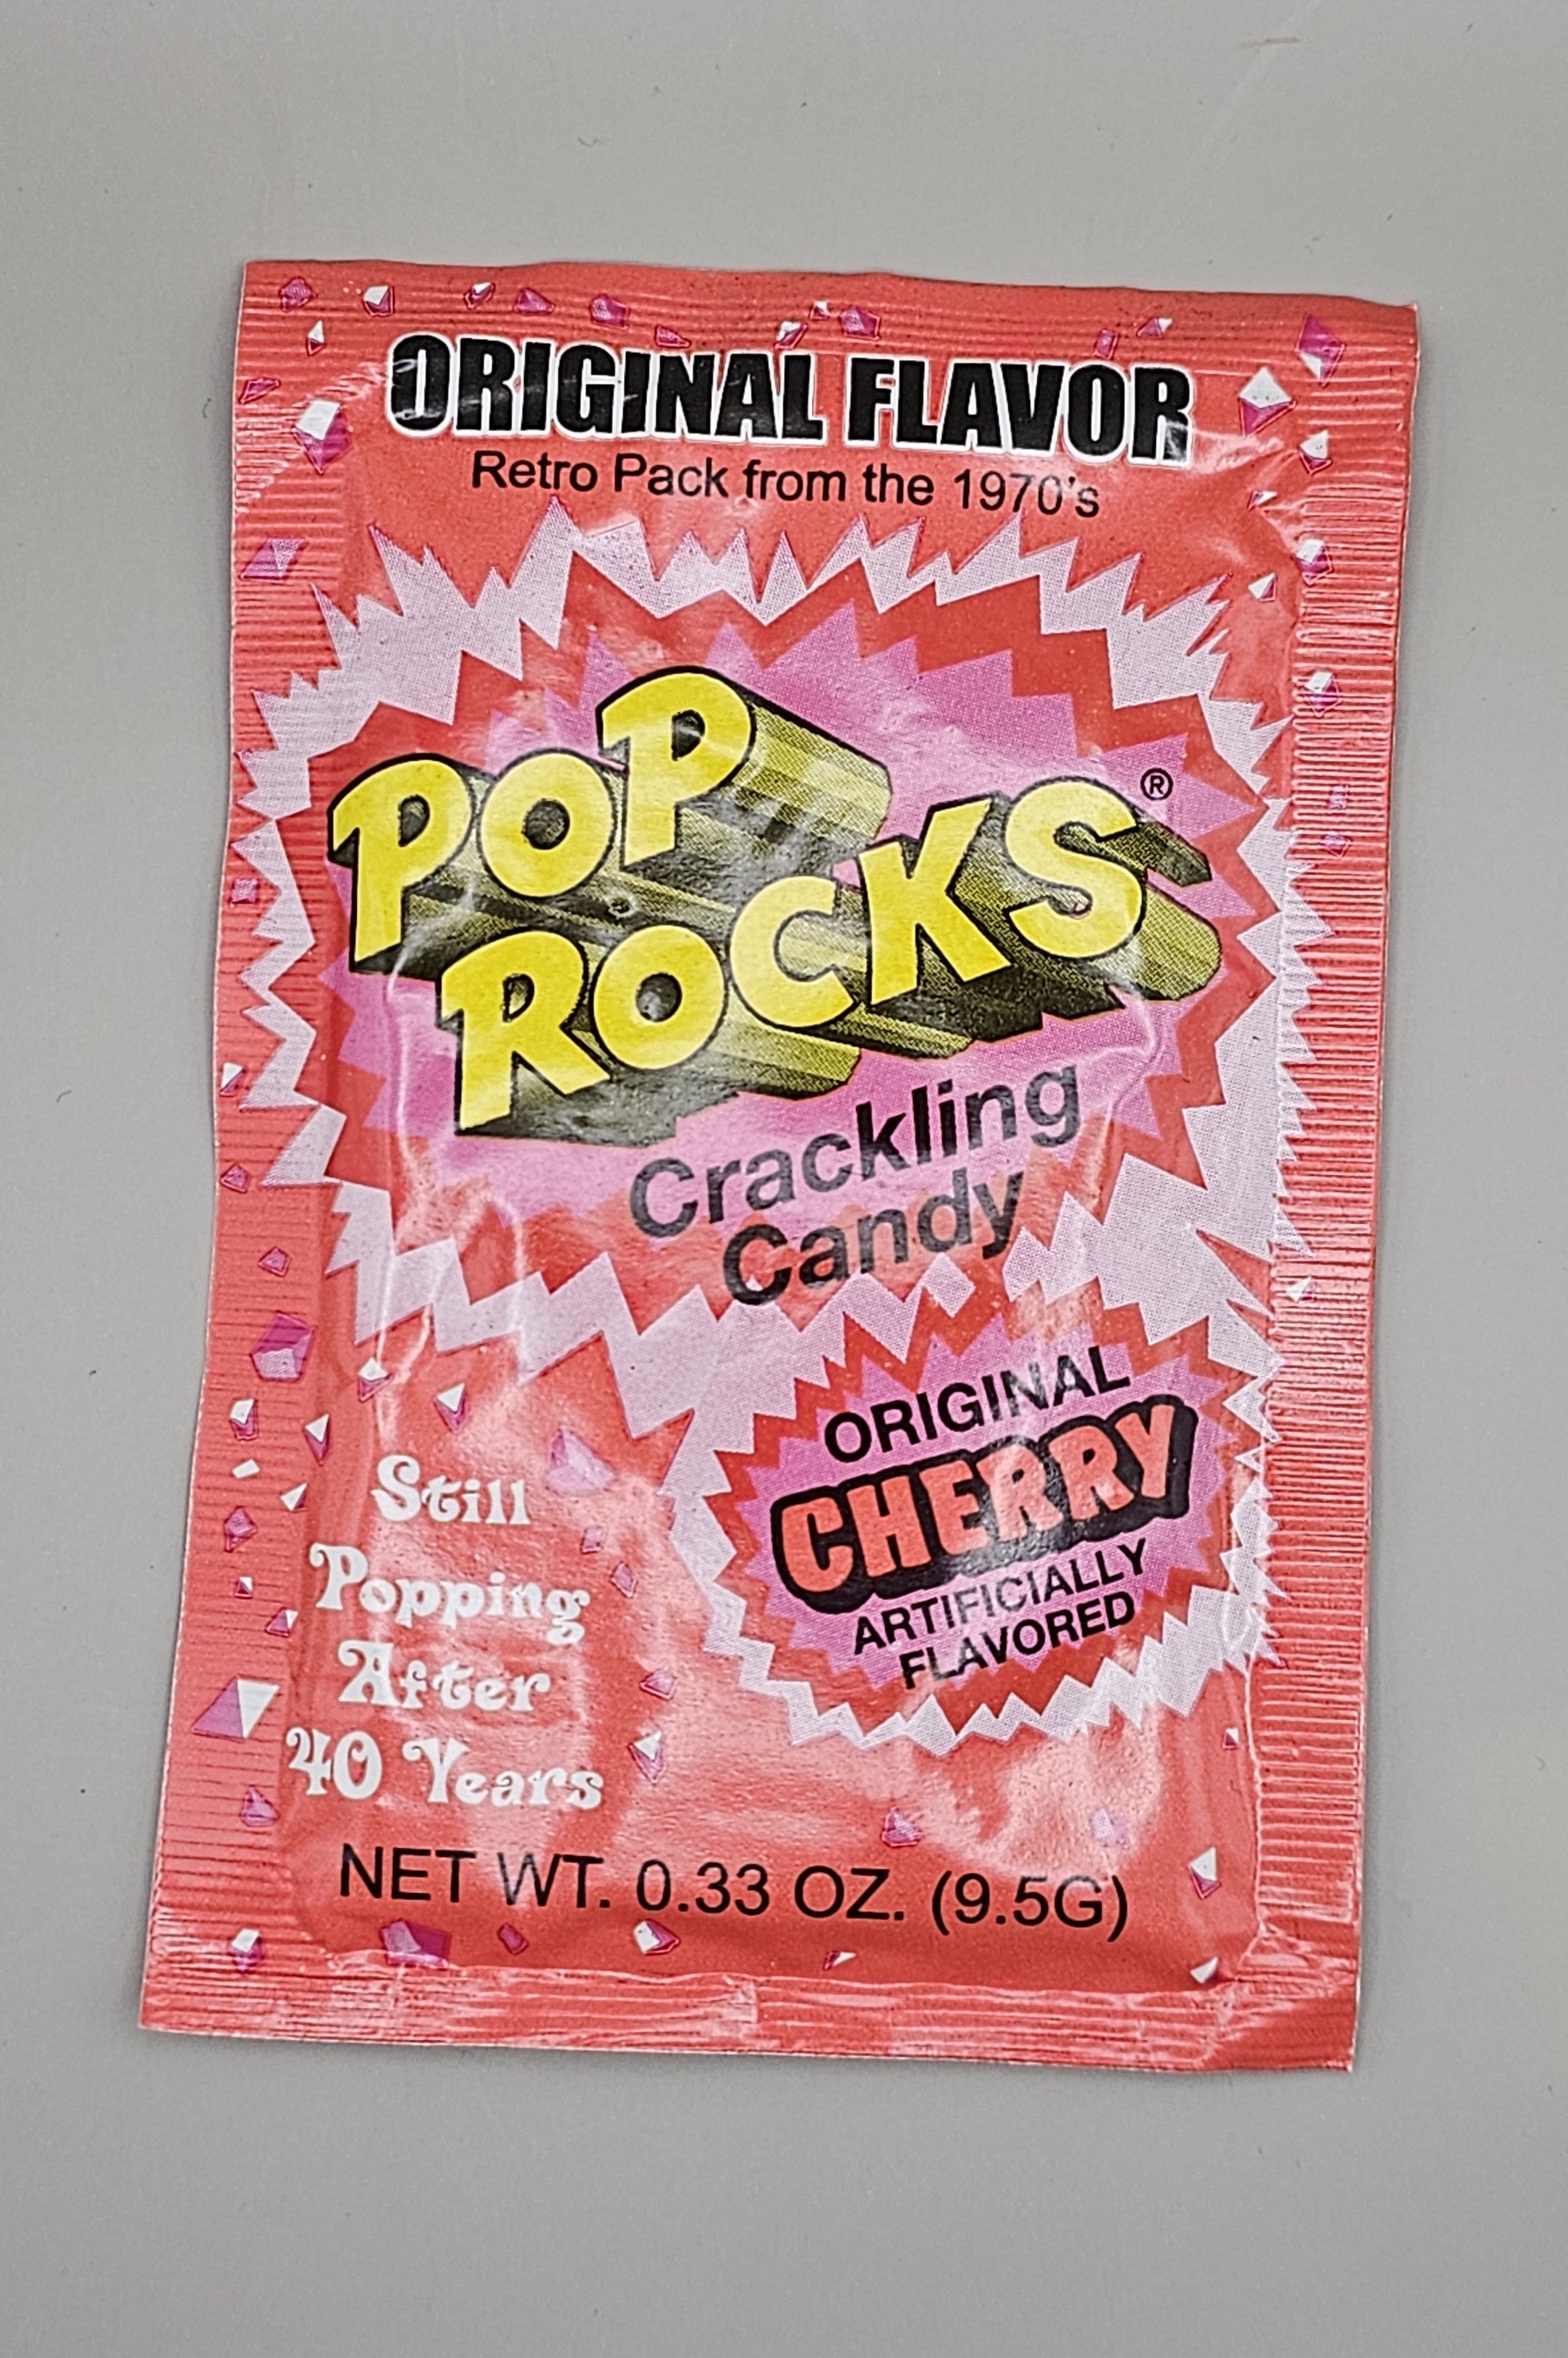 Cherry pop rocks.